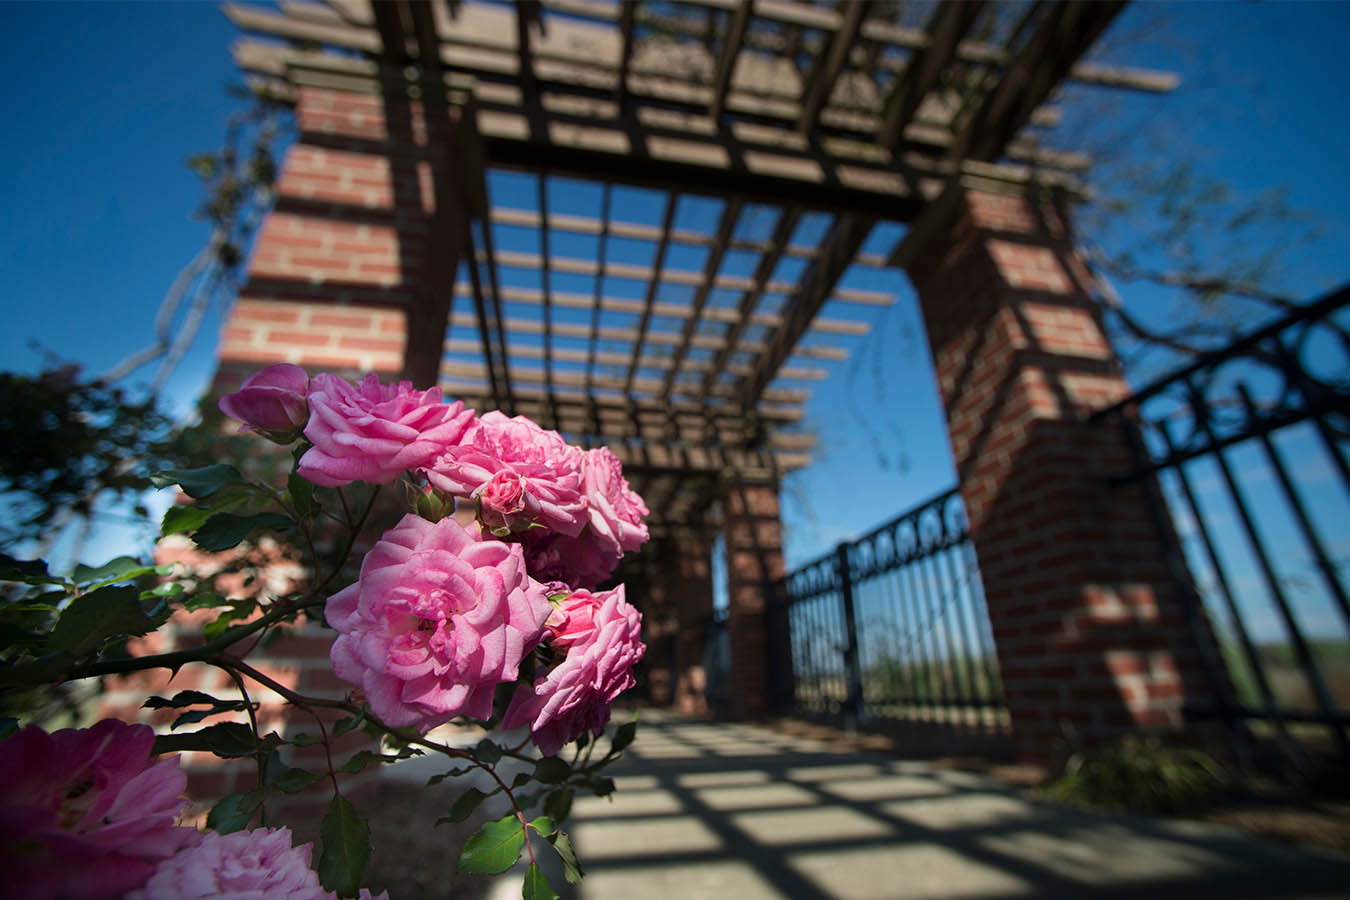 Veterans Memorial Rose Garden Image 1